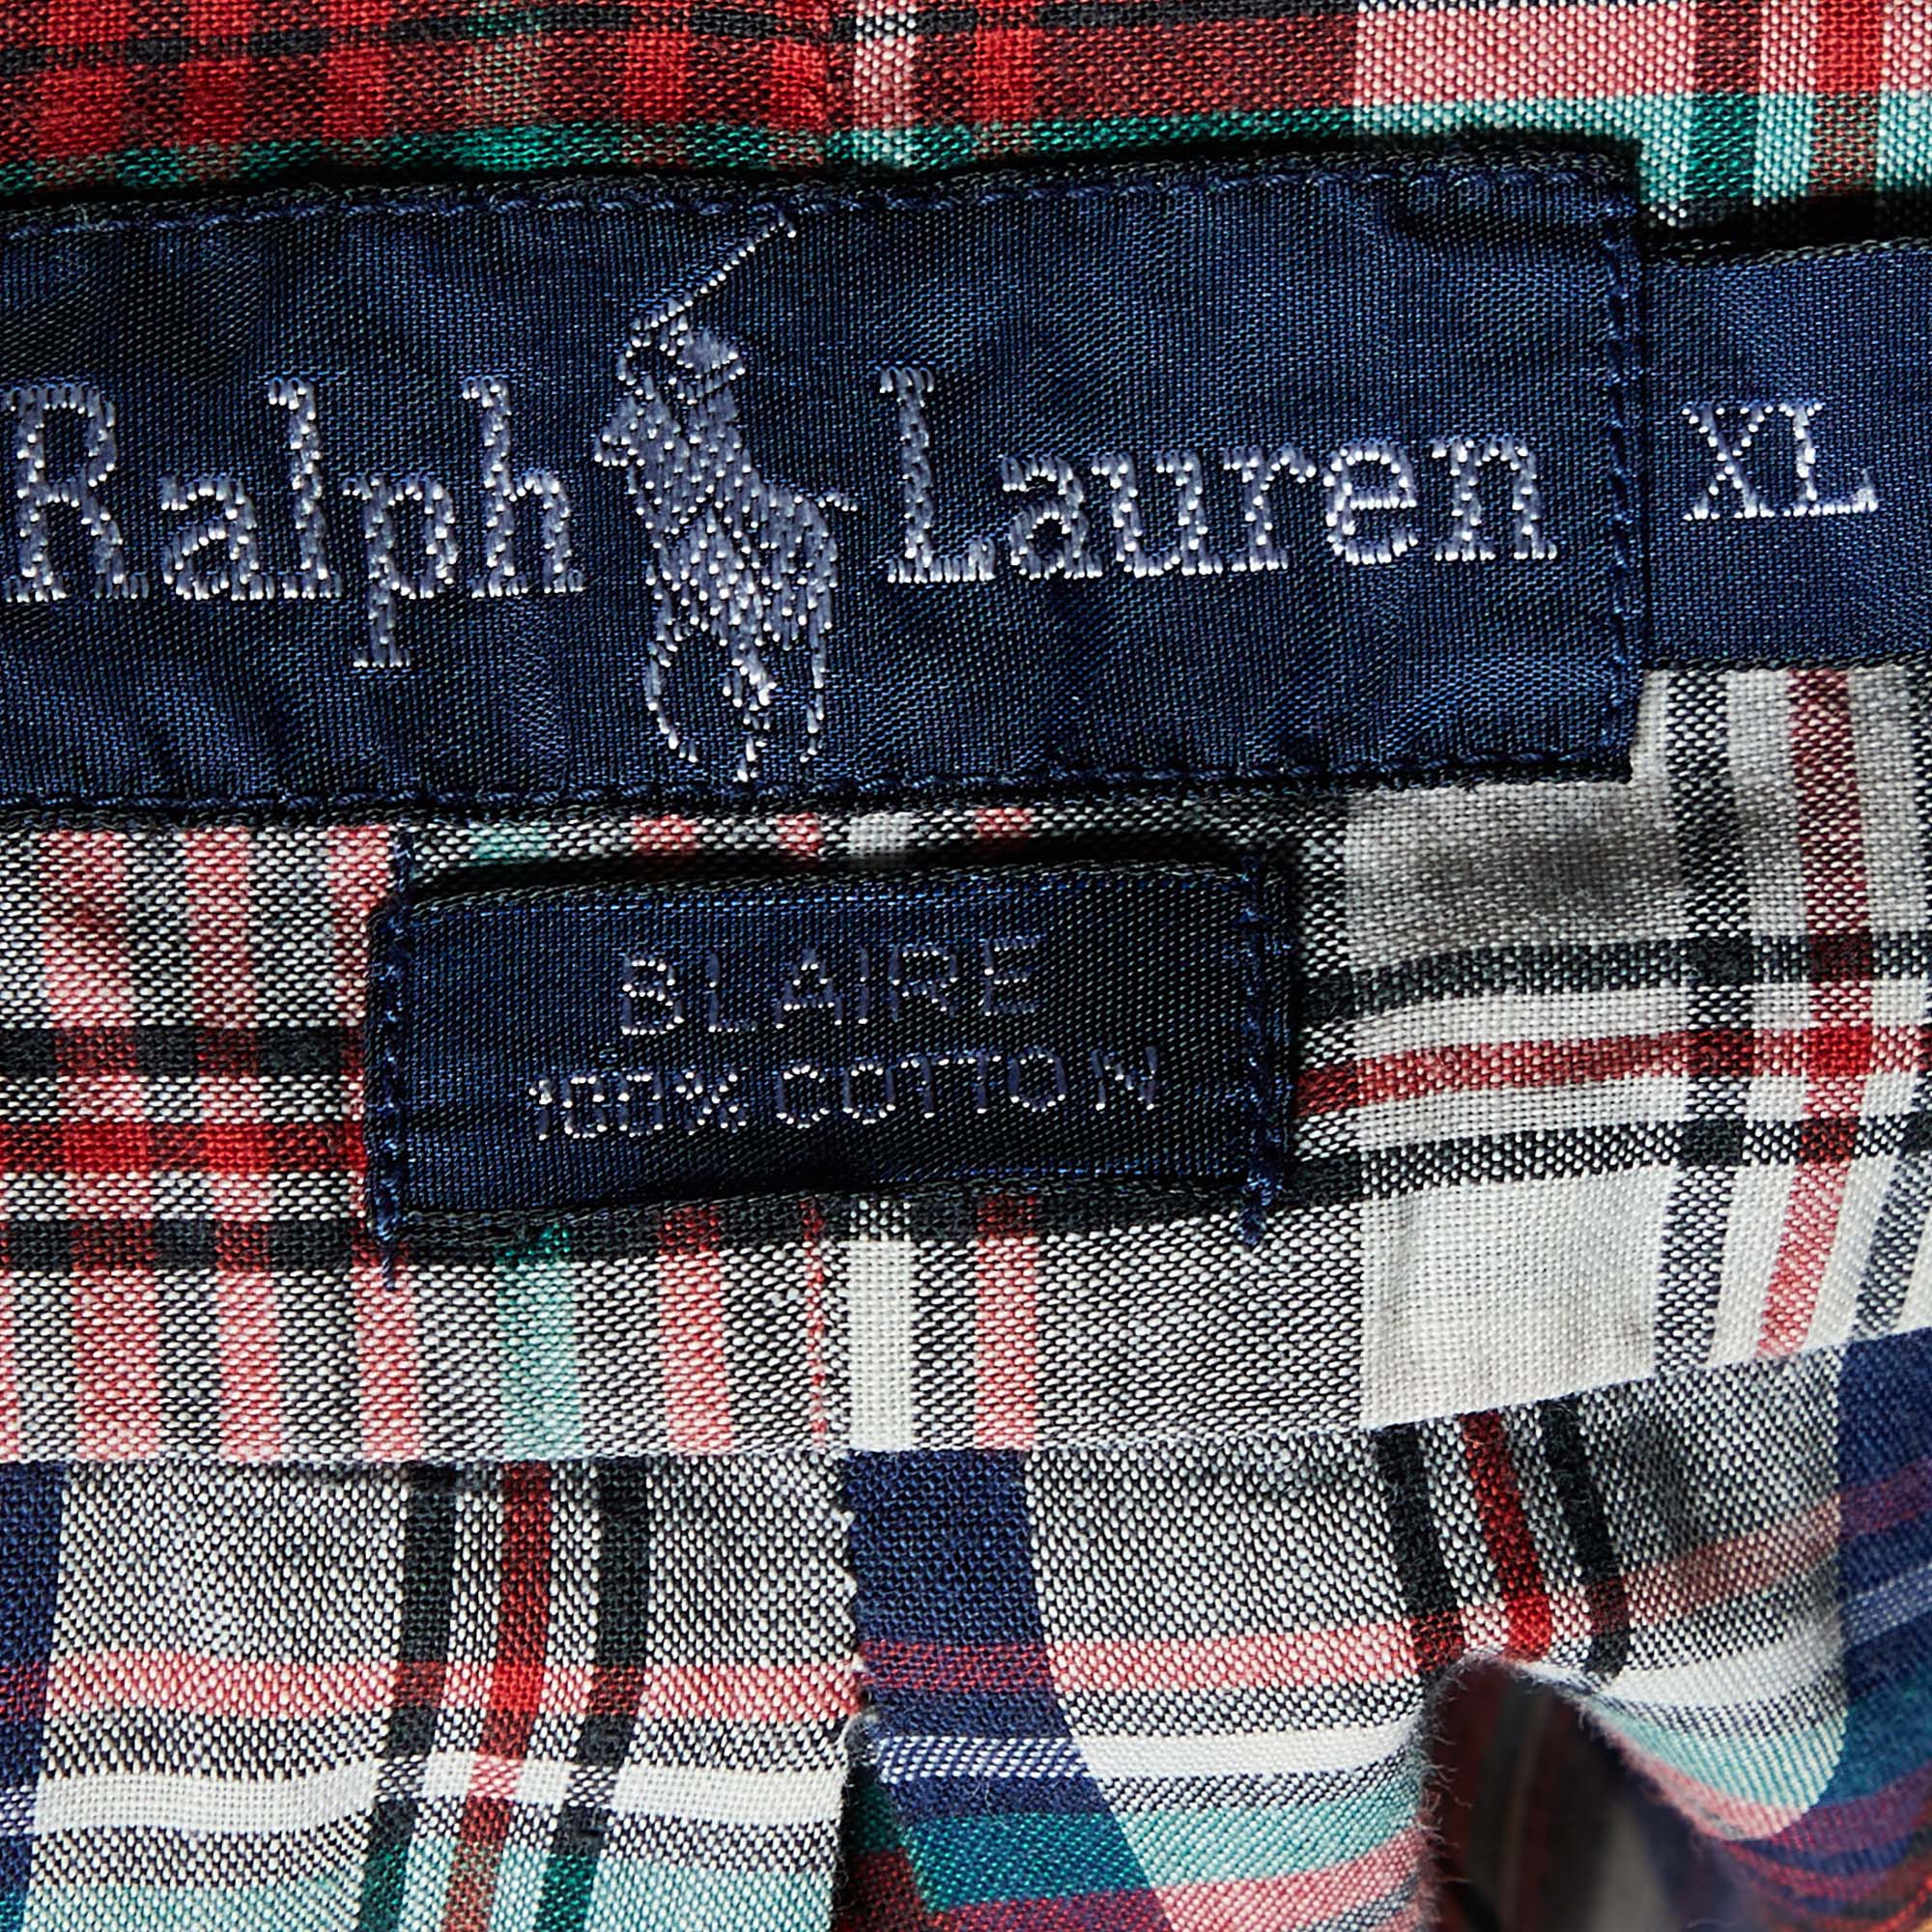 Ralph Lauren Red Checked Cotton Button Down Blaire Shirt XL